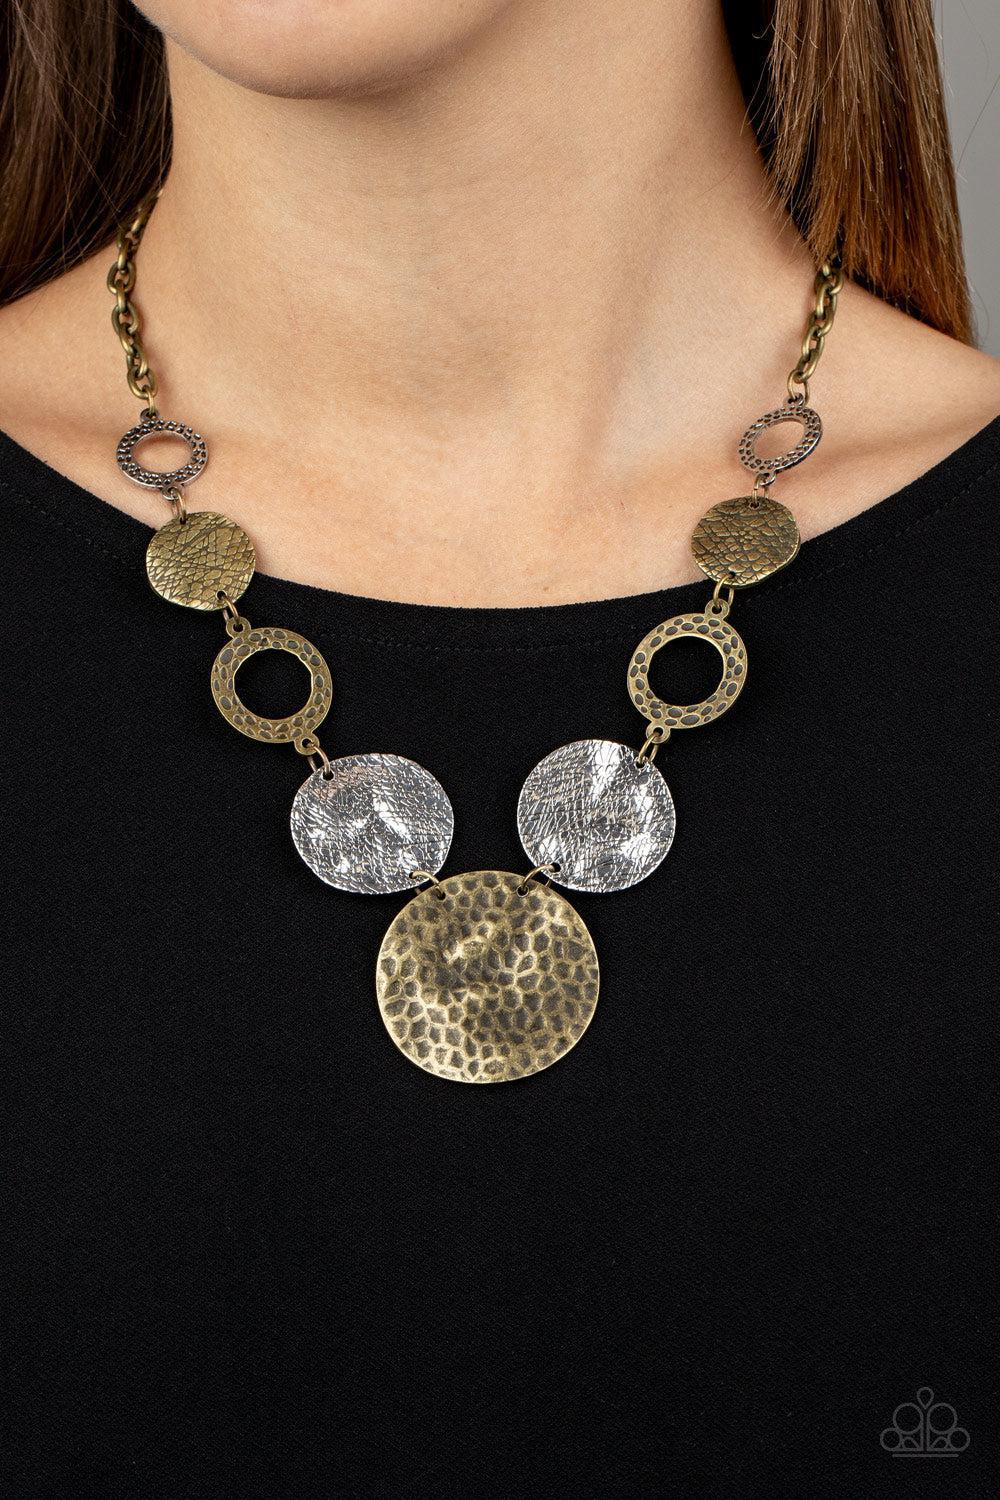 Terra Adventure Brass Necklace - Paparazzi Accessories- lightbox - CarasShop.com - $5 Jewelry by Cara Jewels